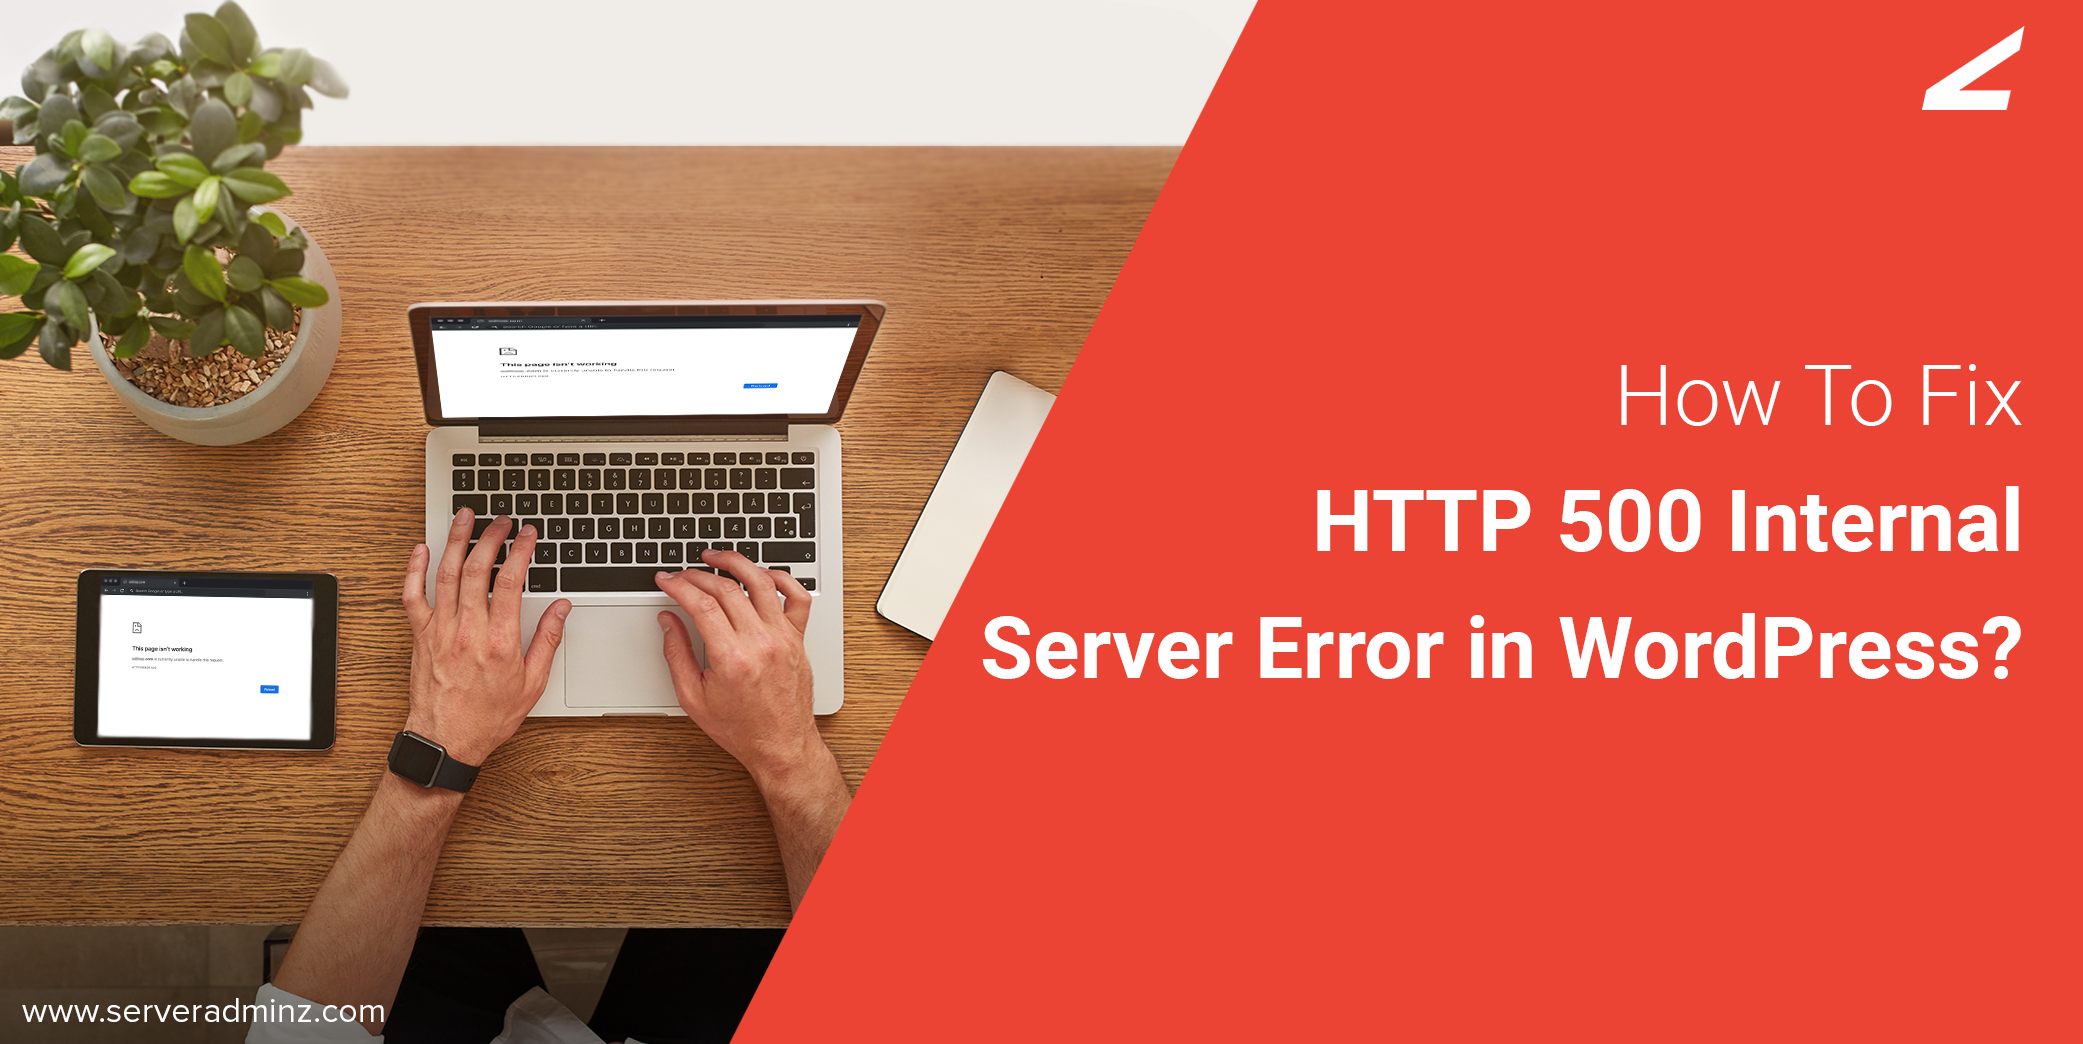 How To Fix HTTP 500 Internal Server Error in WordPress?